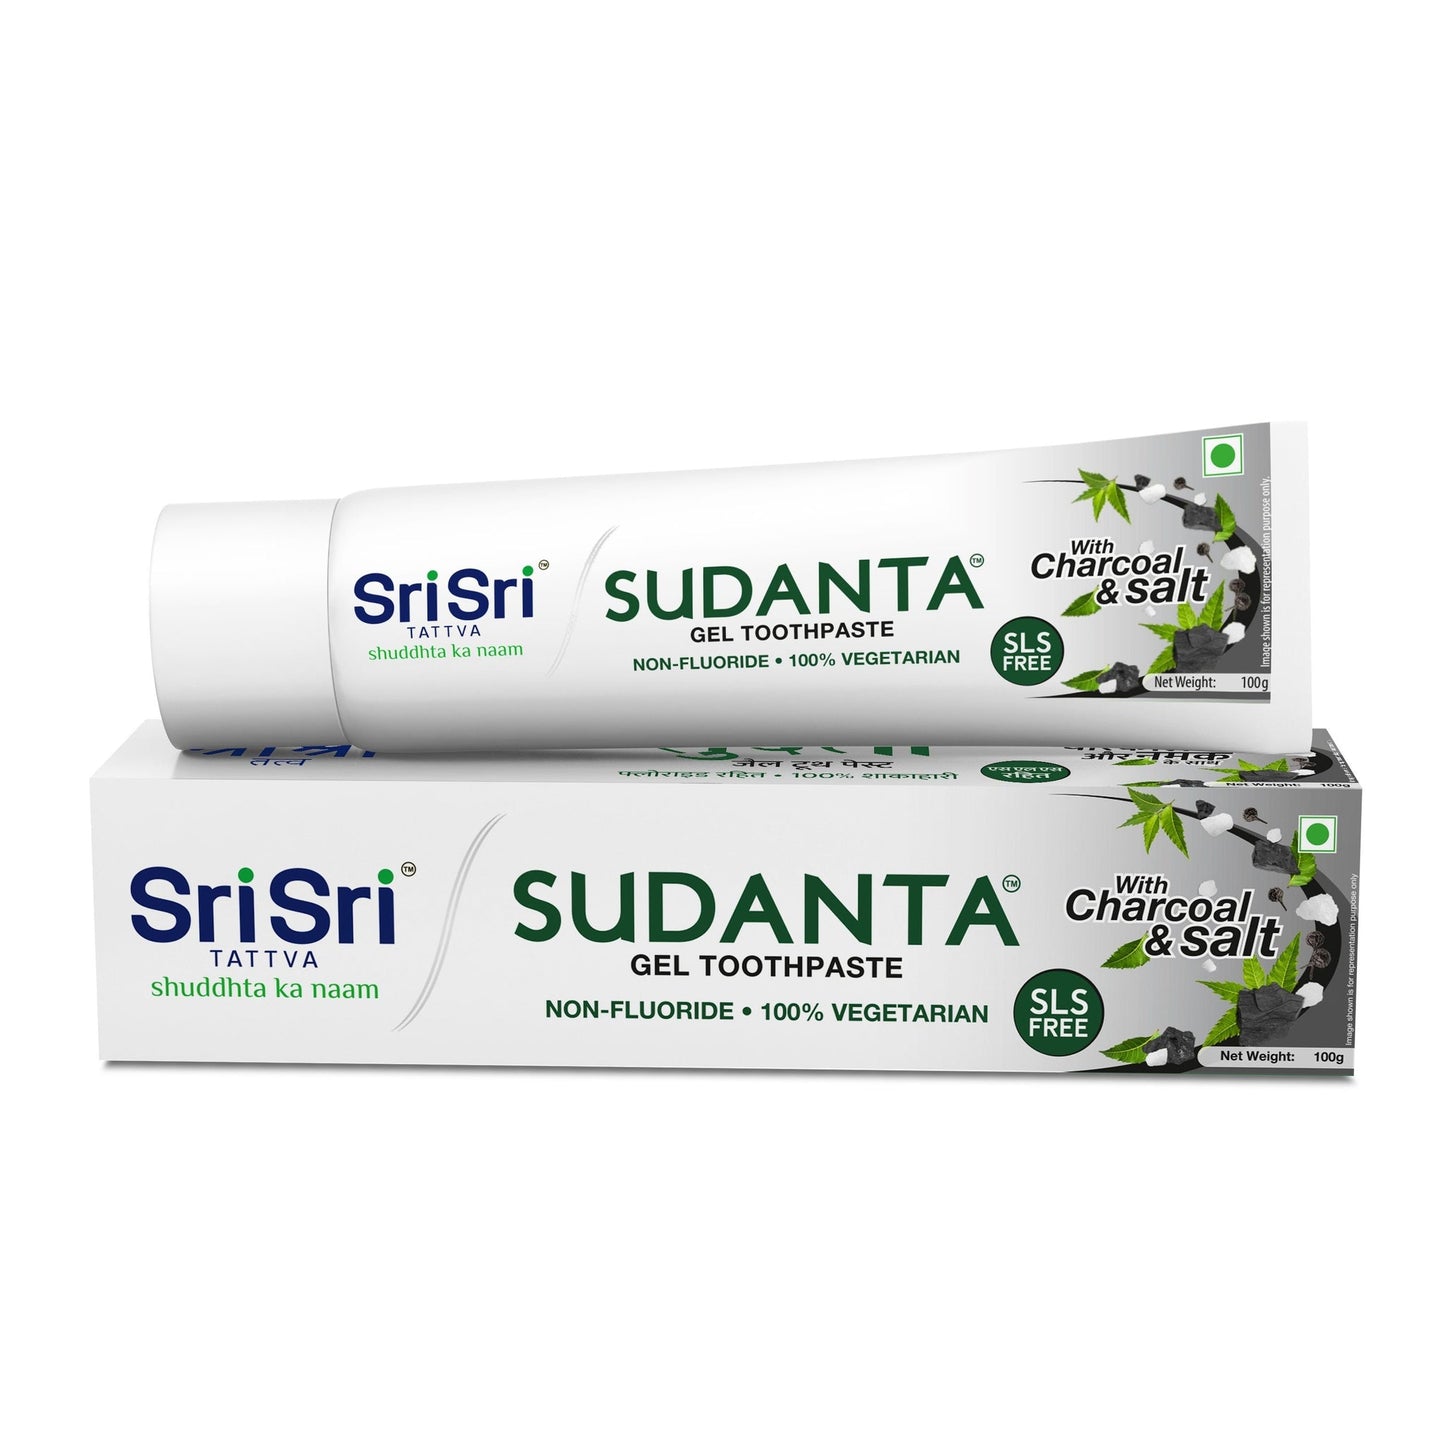 Sudanta Gel Toothpaste, 100g With Charcoal & Salt | SLS Free. Non - Fluoride - 100% Vegetarian,